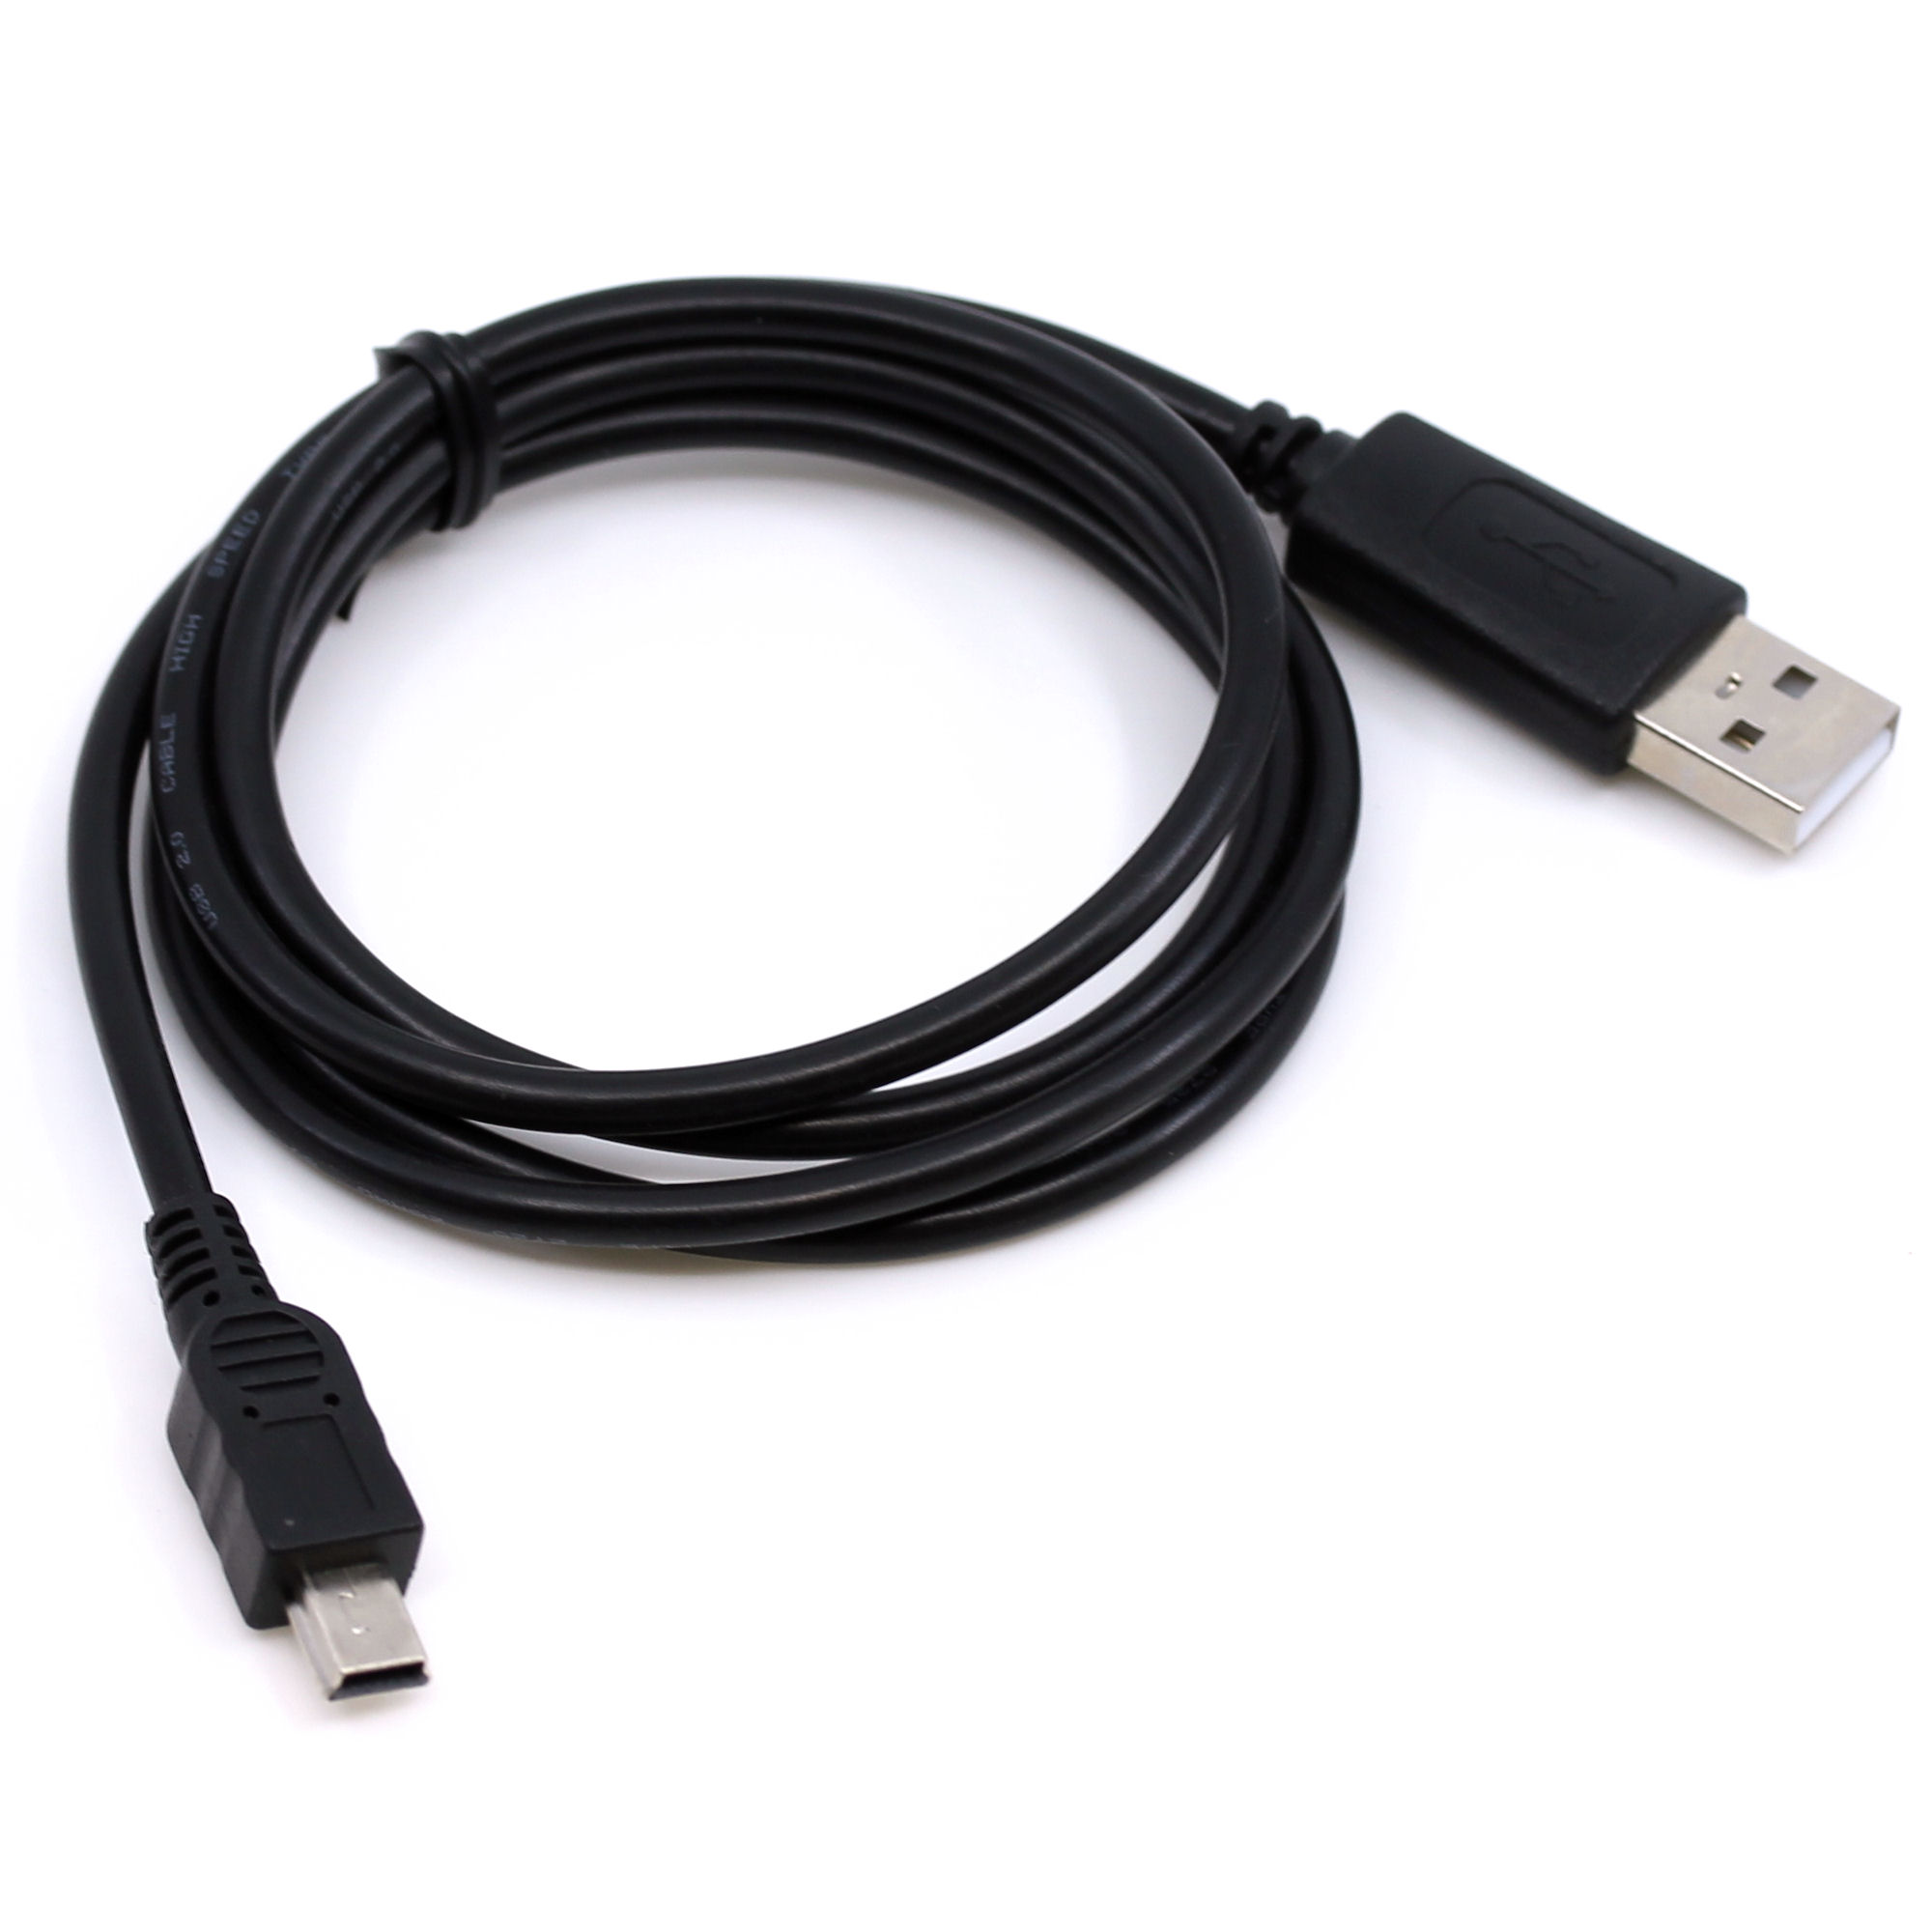 USB Datenkabel für JVC GR-HD1, GR-HD3, GR-HD5, GR-HD6, GR-HD7, GR-X5, GZ-HD300, GZ-HD300A, GZ-M55US